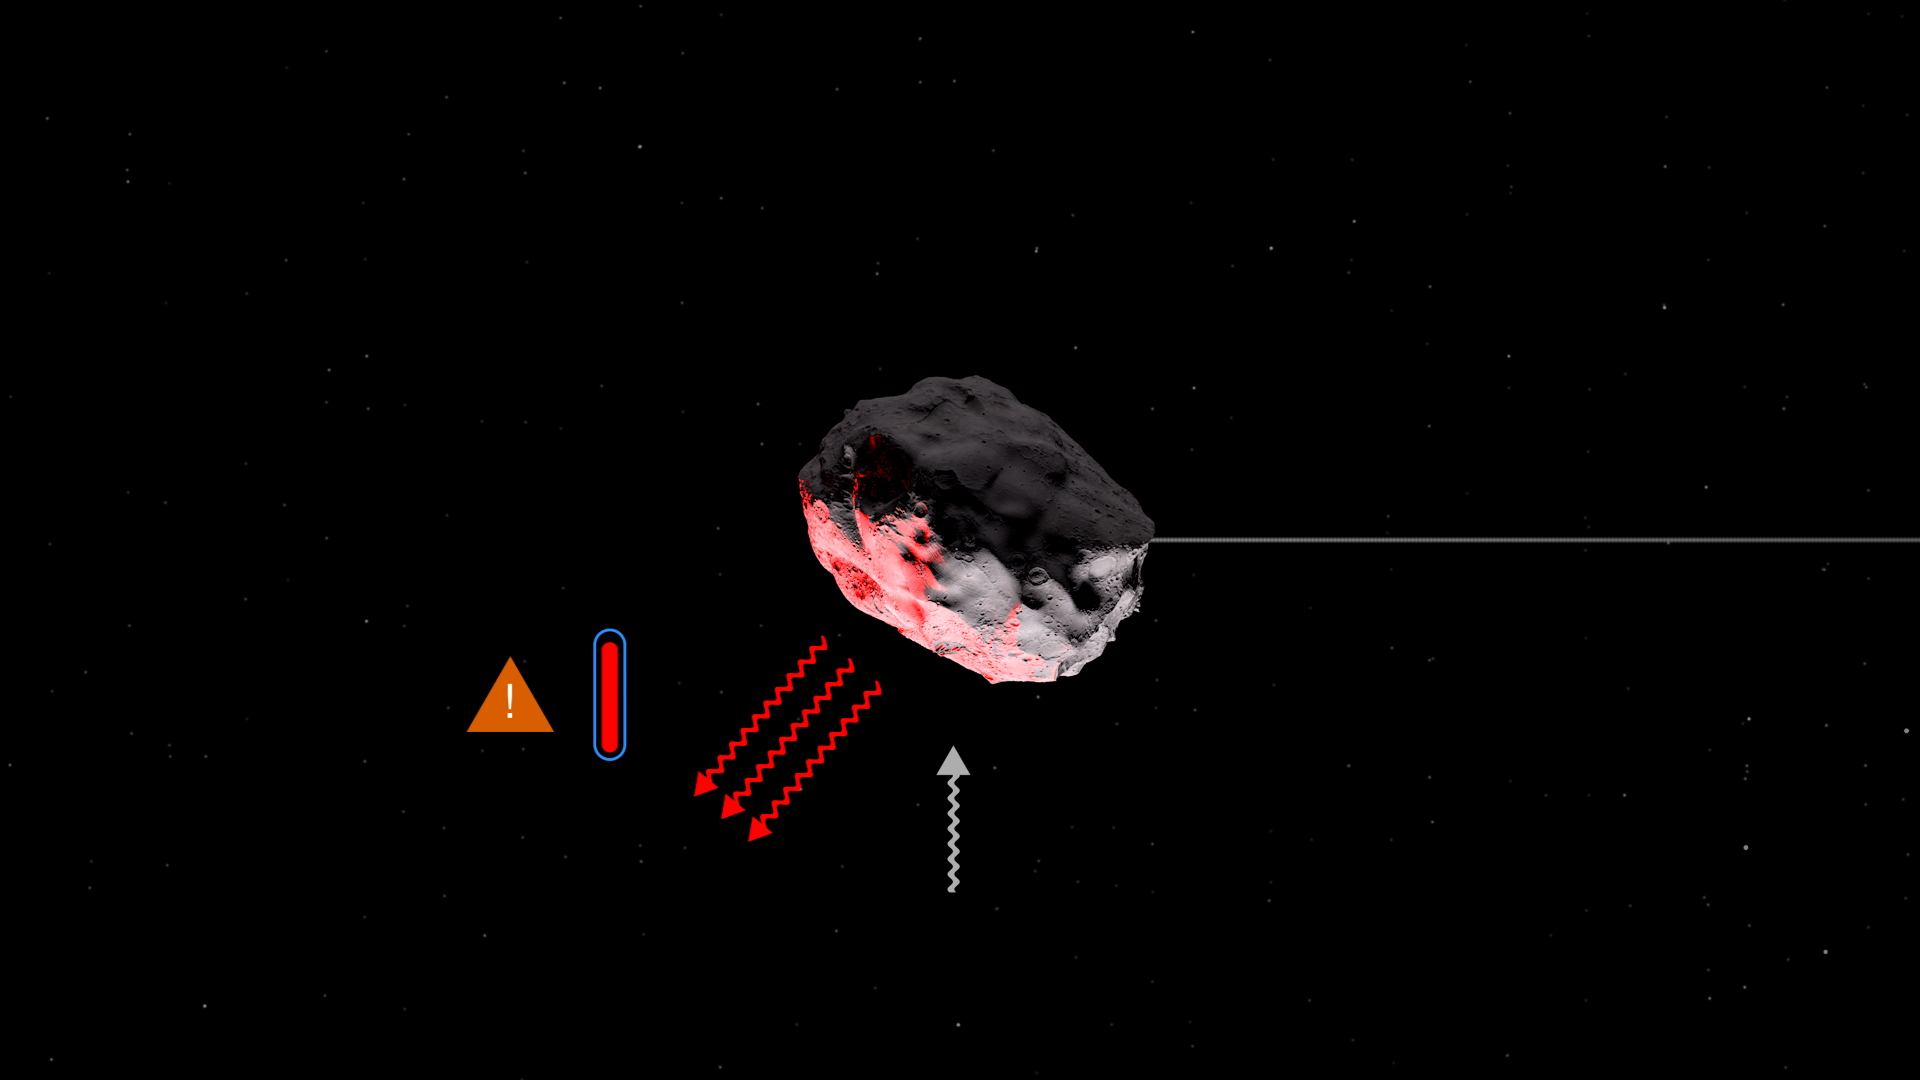 3. Farnocchia - Sunlight alters the orbit of a rotating asteroid (Yarkovsky effect). Credit: NASA/Goddard